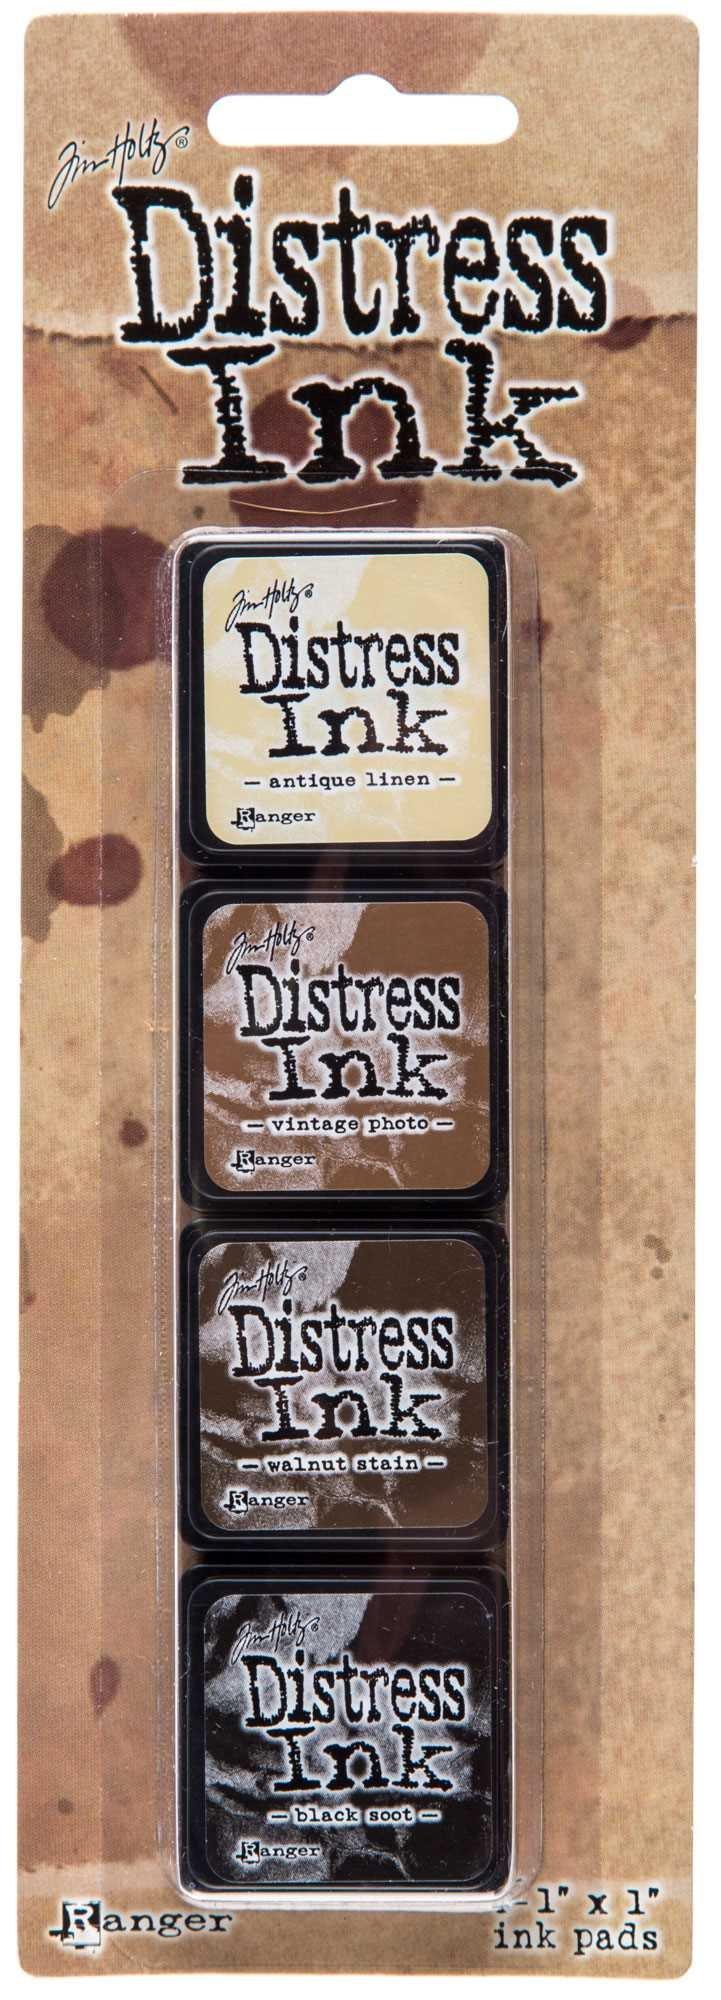 Tim Holtz Mini Distress Ink Pads, Hobby Lobby